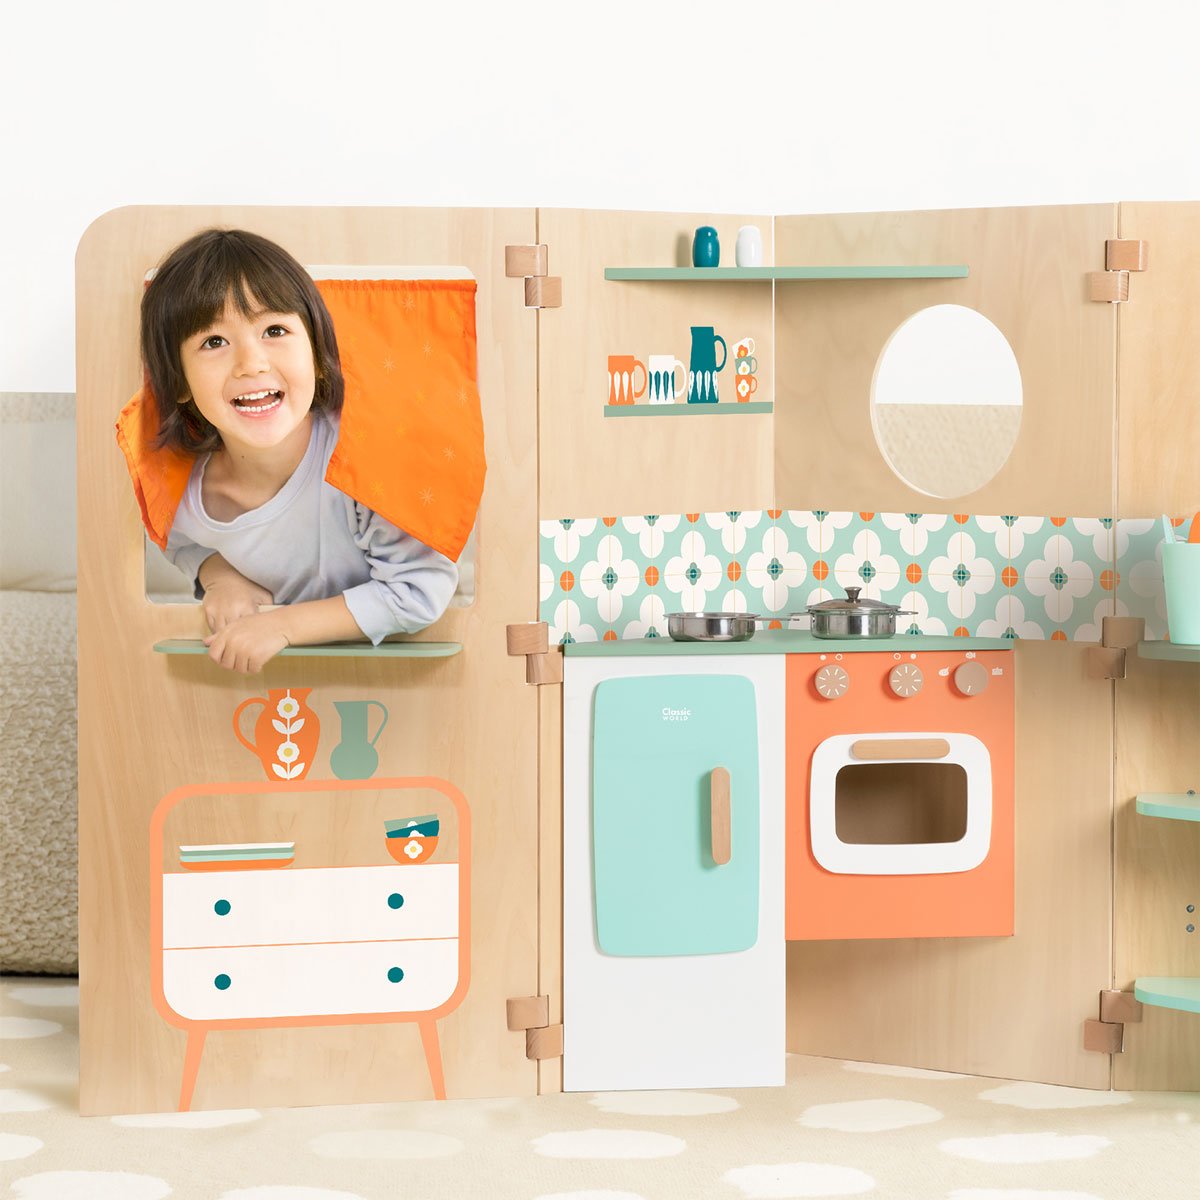 Kids Imaginative Mini Home